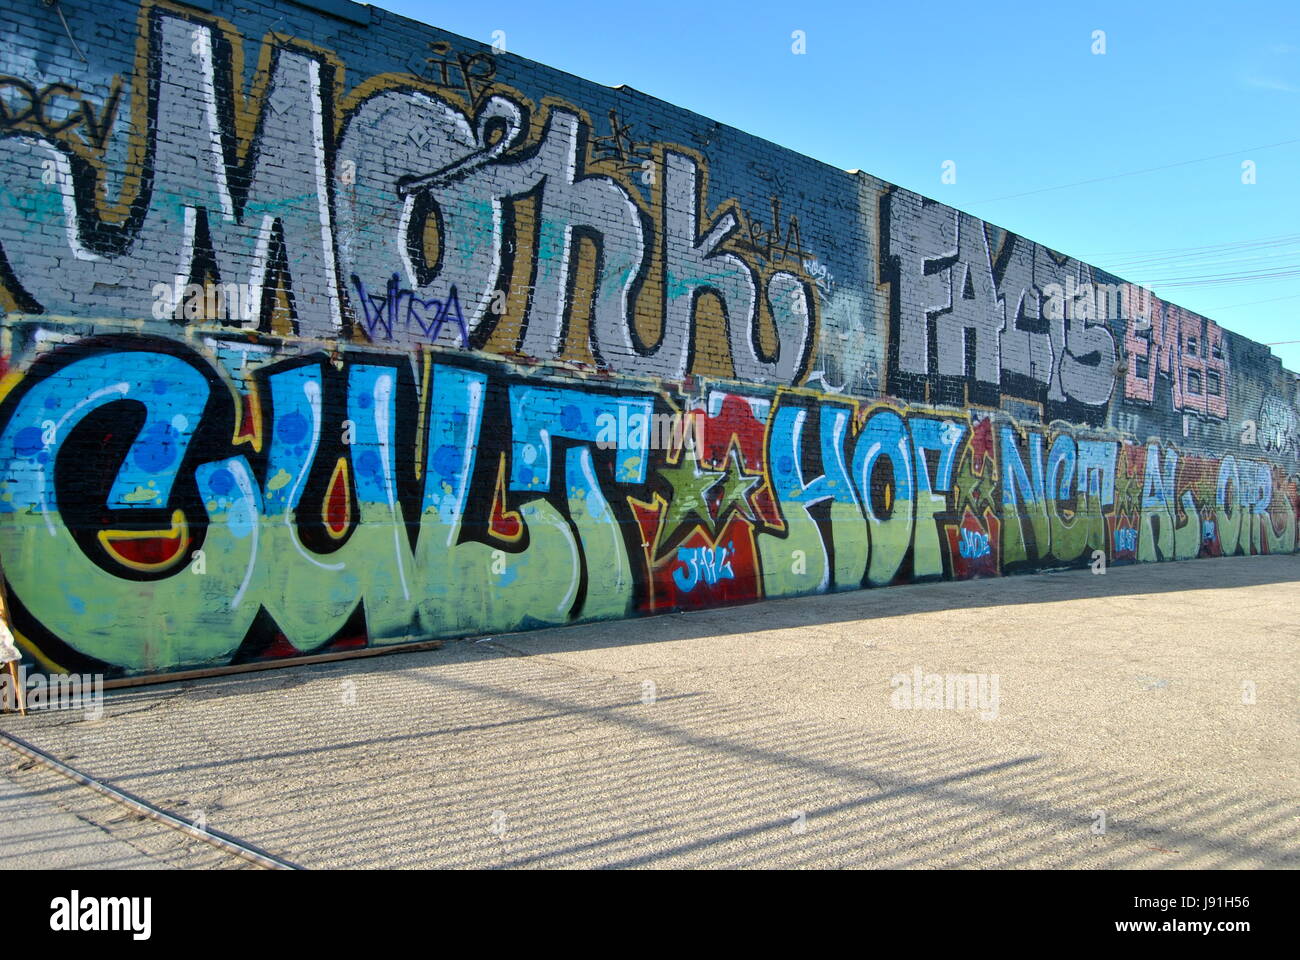 Graffiti covered wall, Los Angeles, California, USA Stock Photo